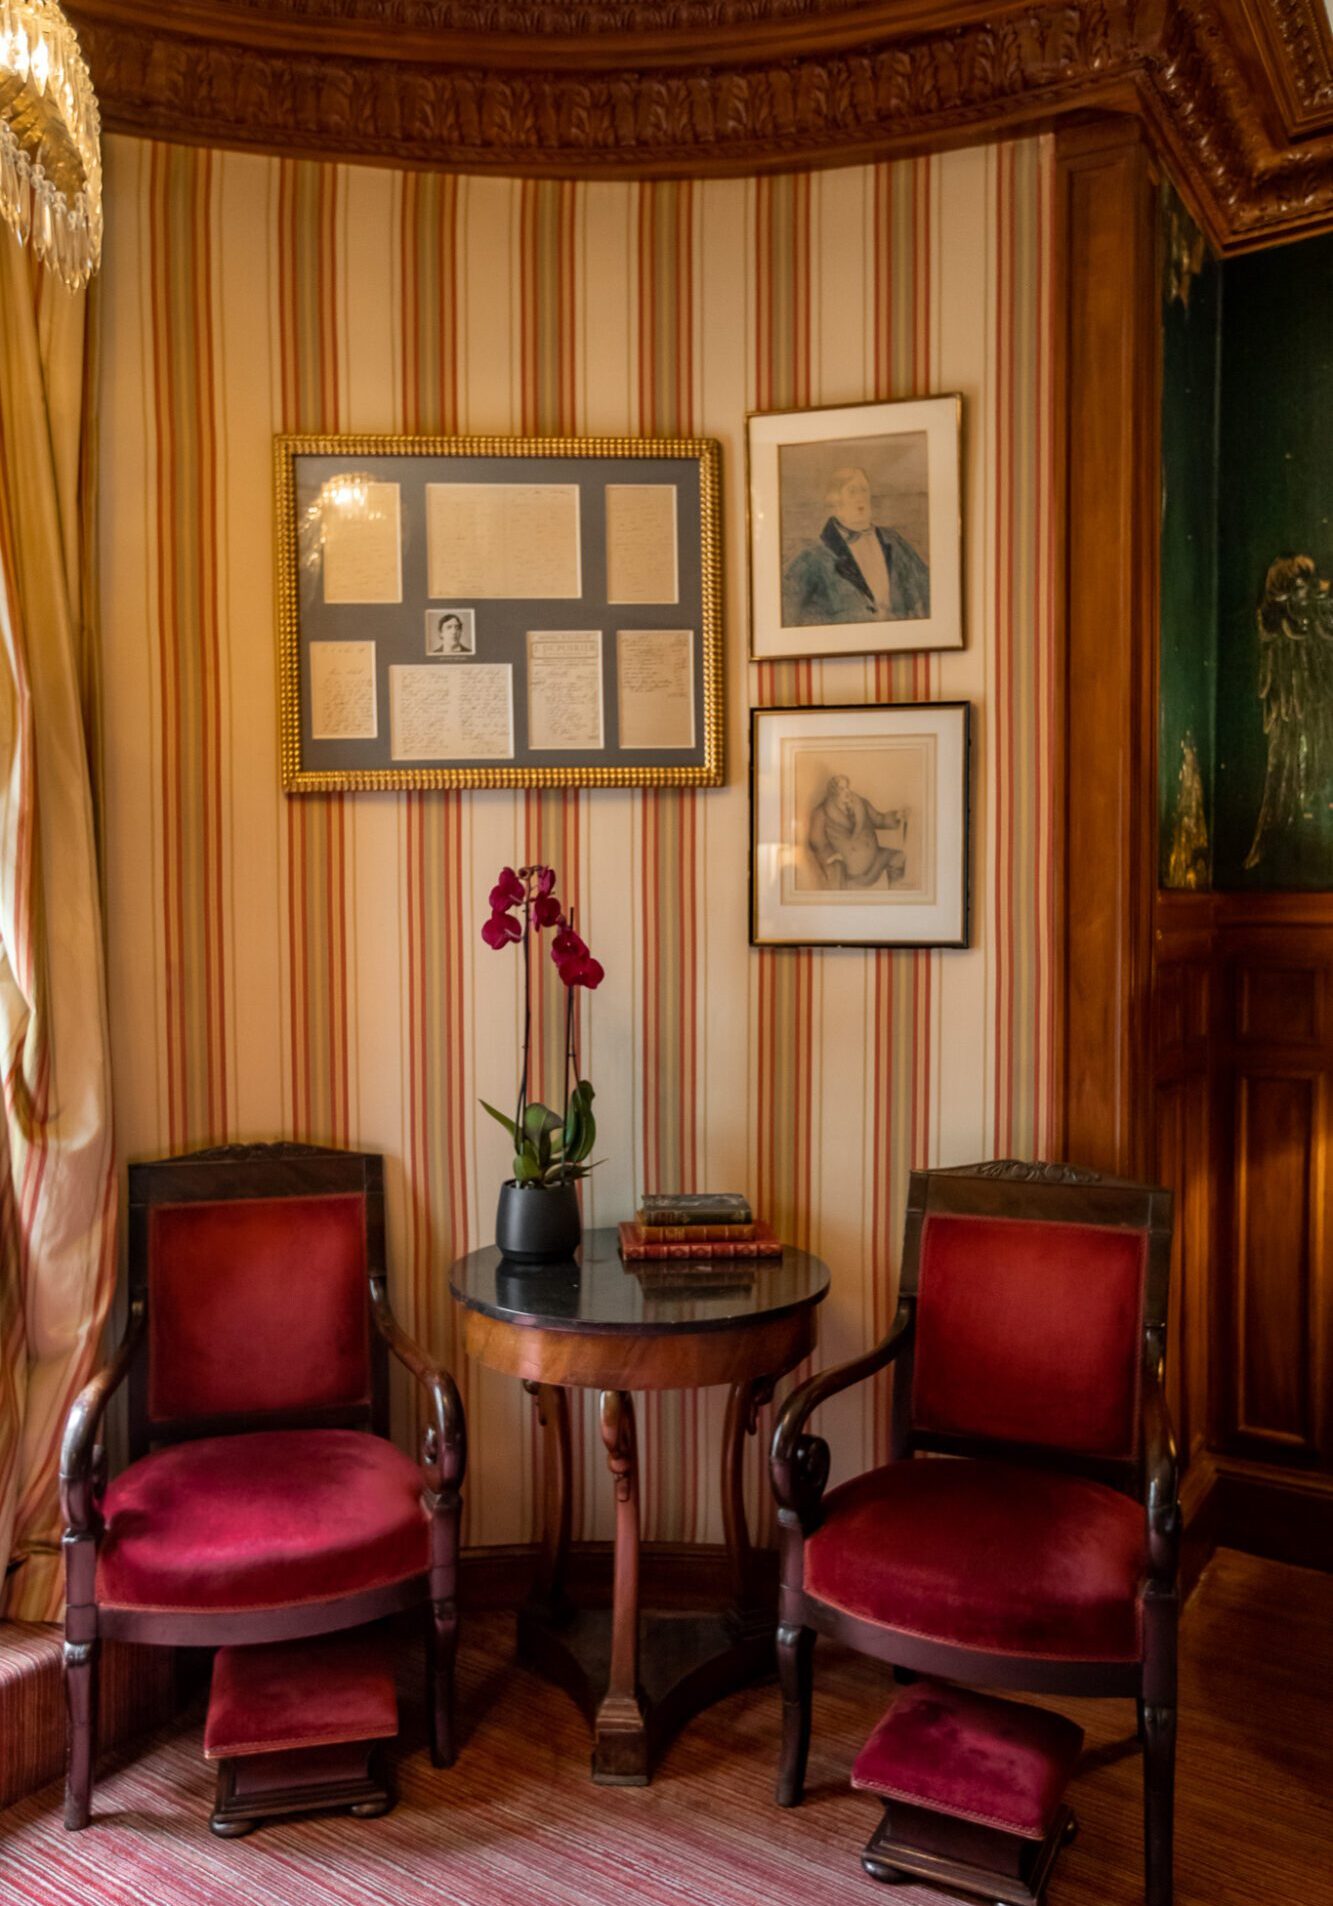 L'Hotel Paris Hotel Review Oscar Wilde Suite Interior